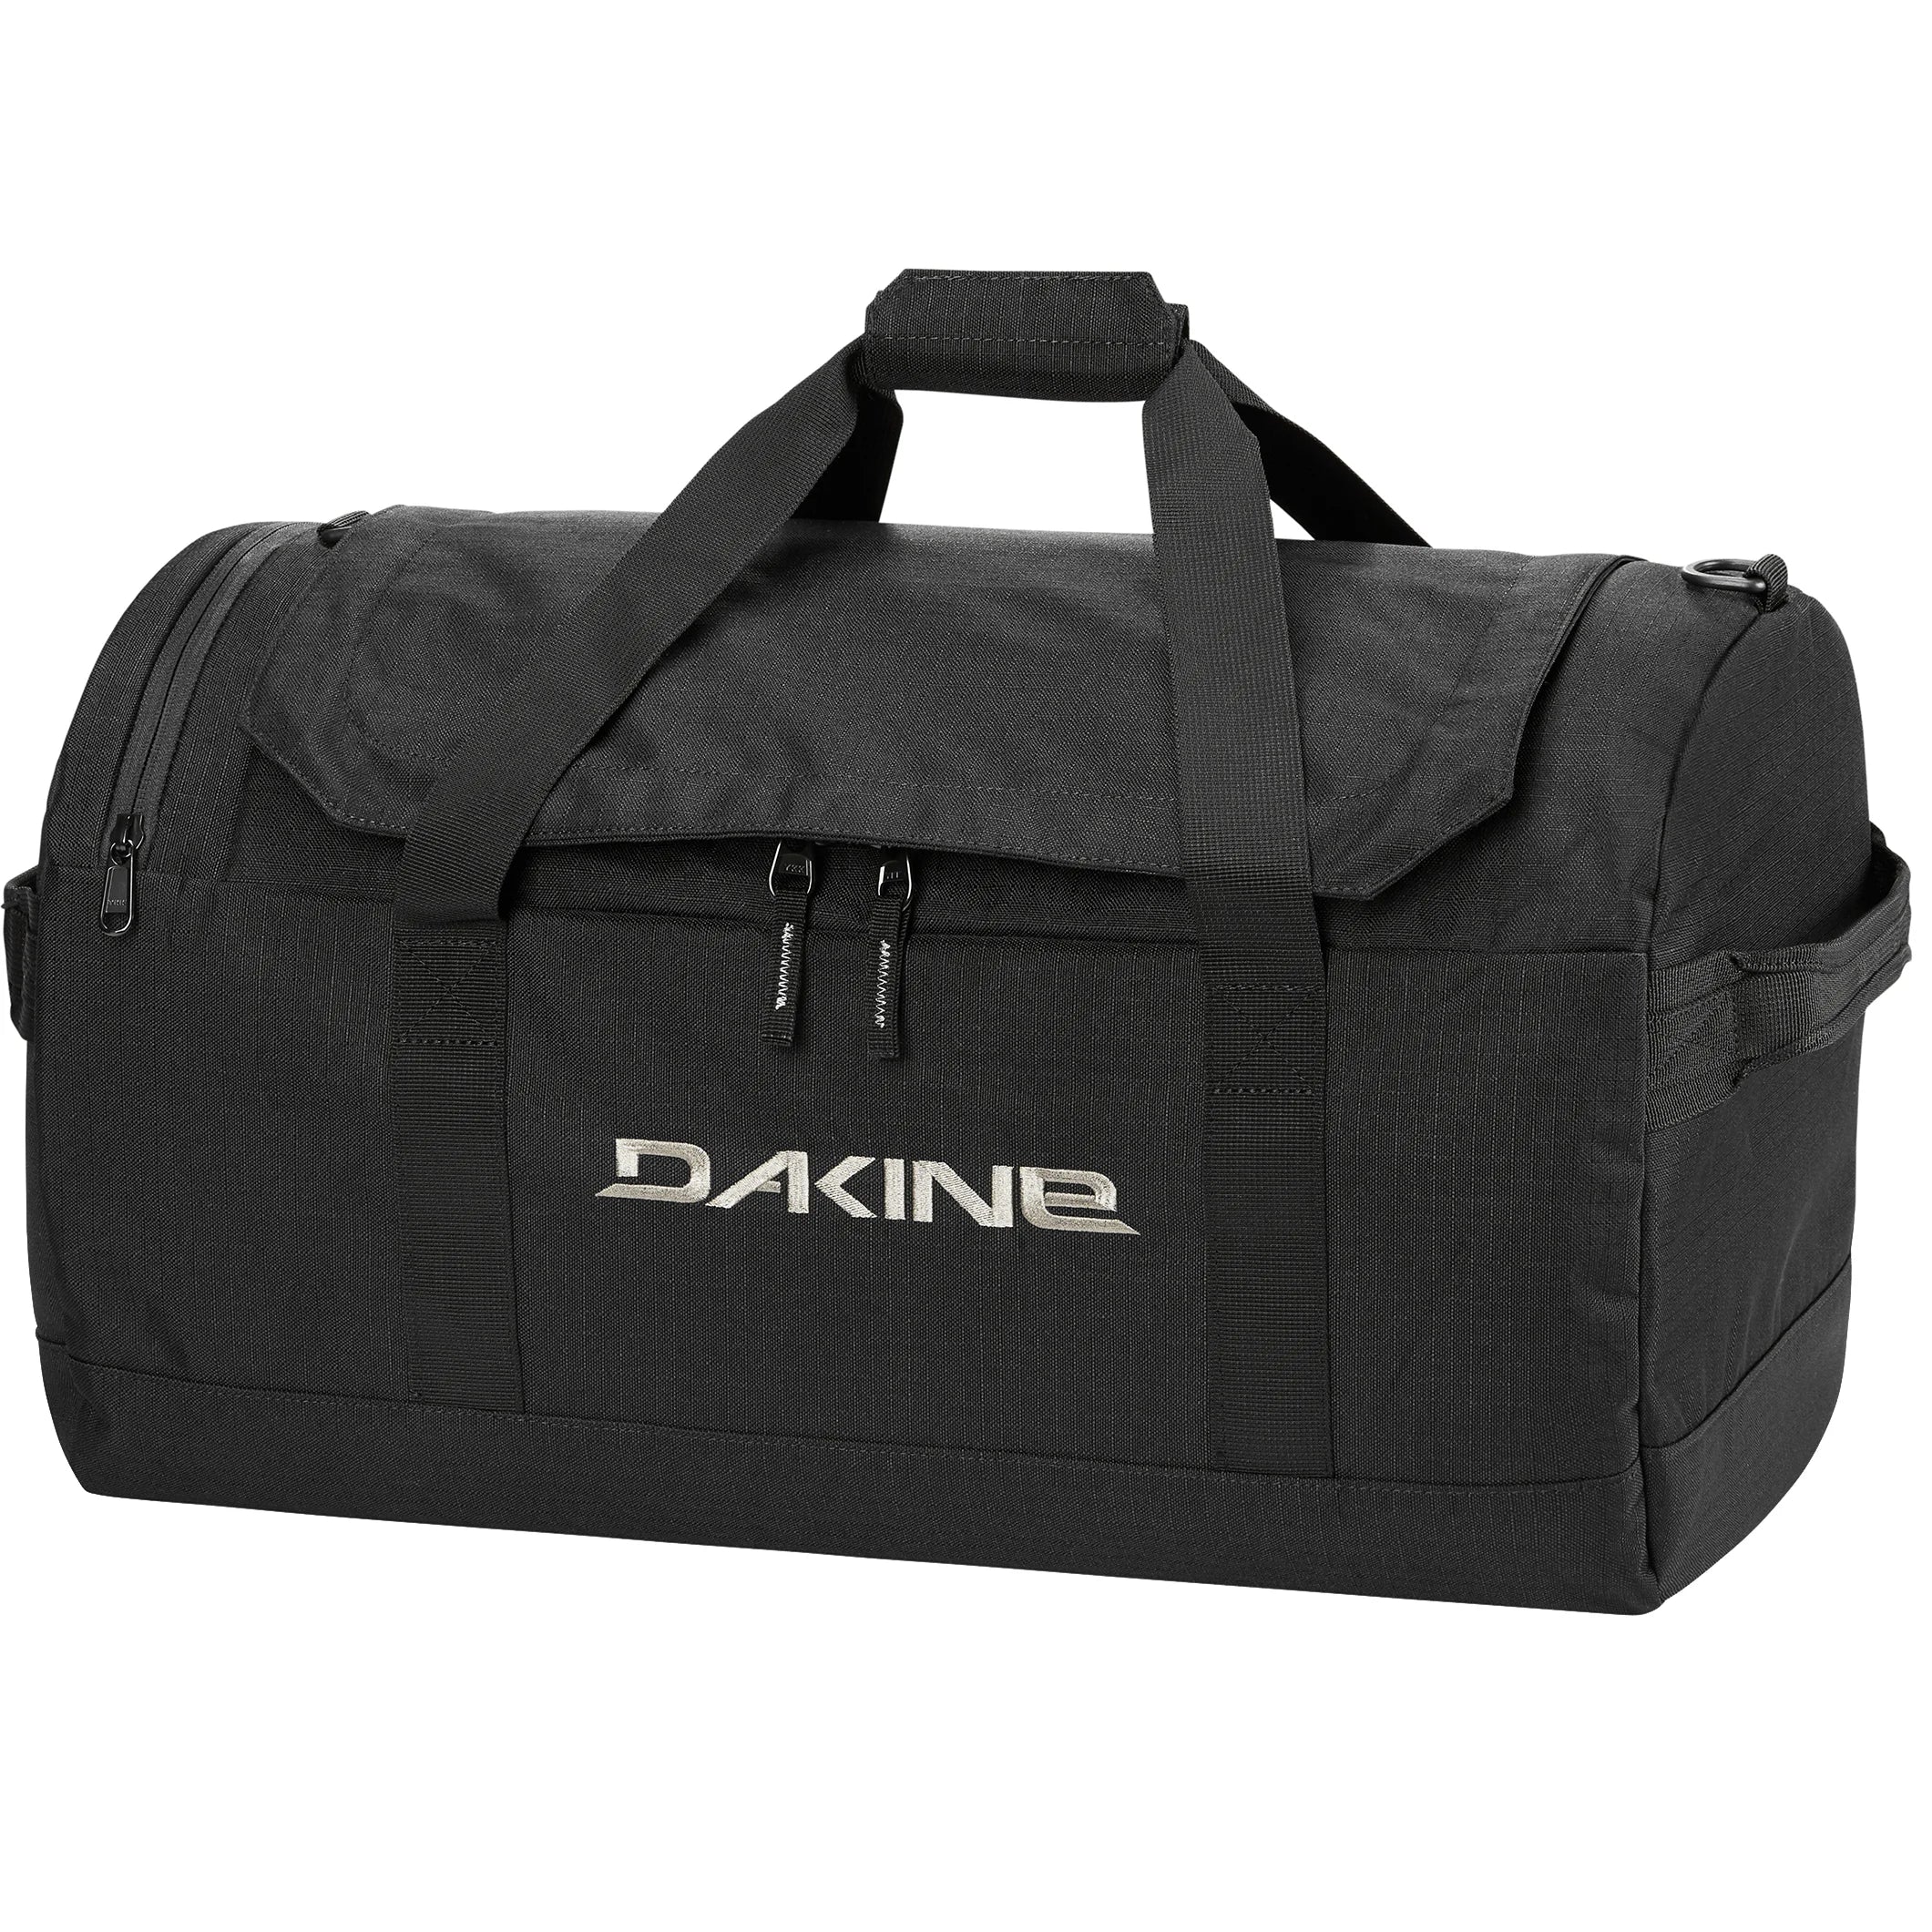 Dakine Packs & Bags EQ Duffle 50L Sports Bag 56 cm - Black